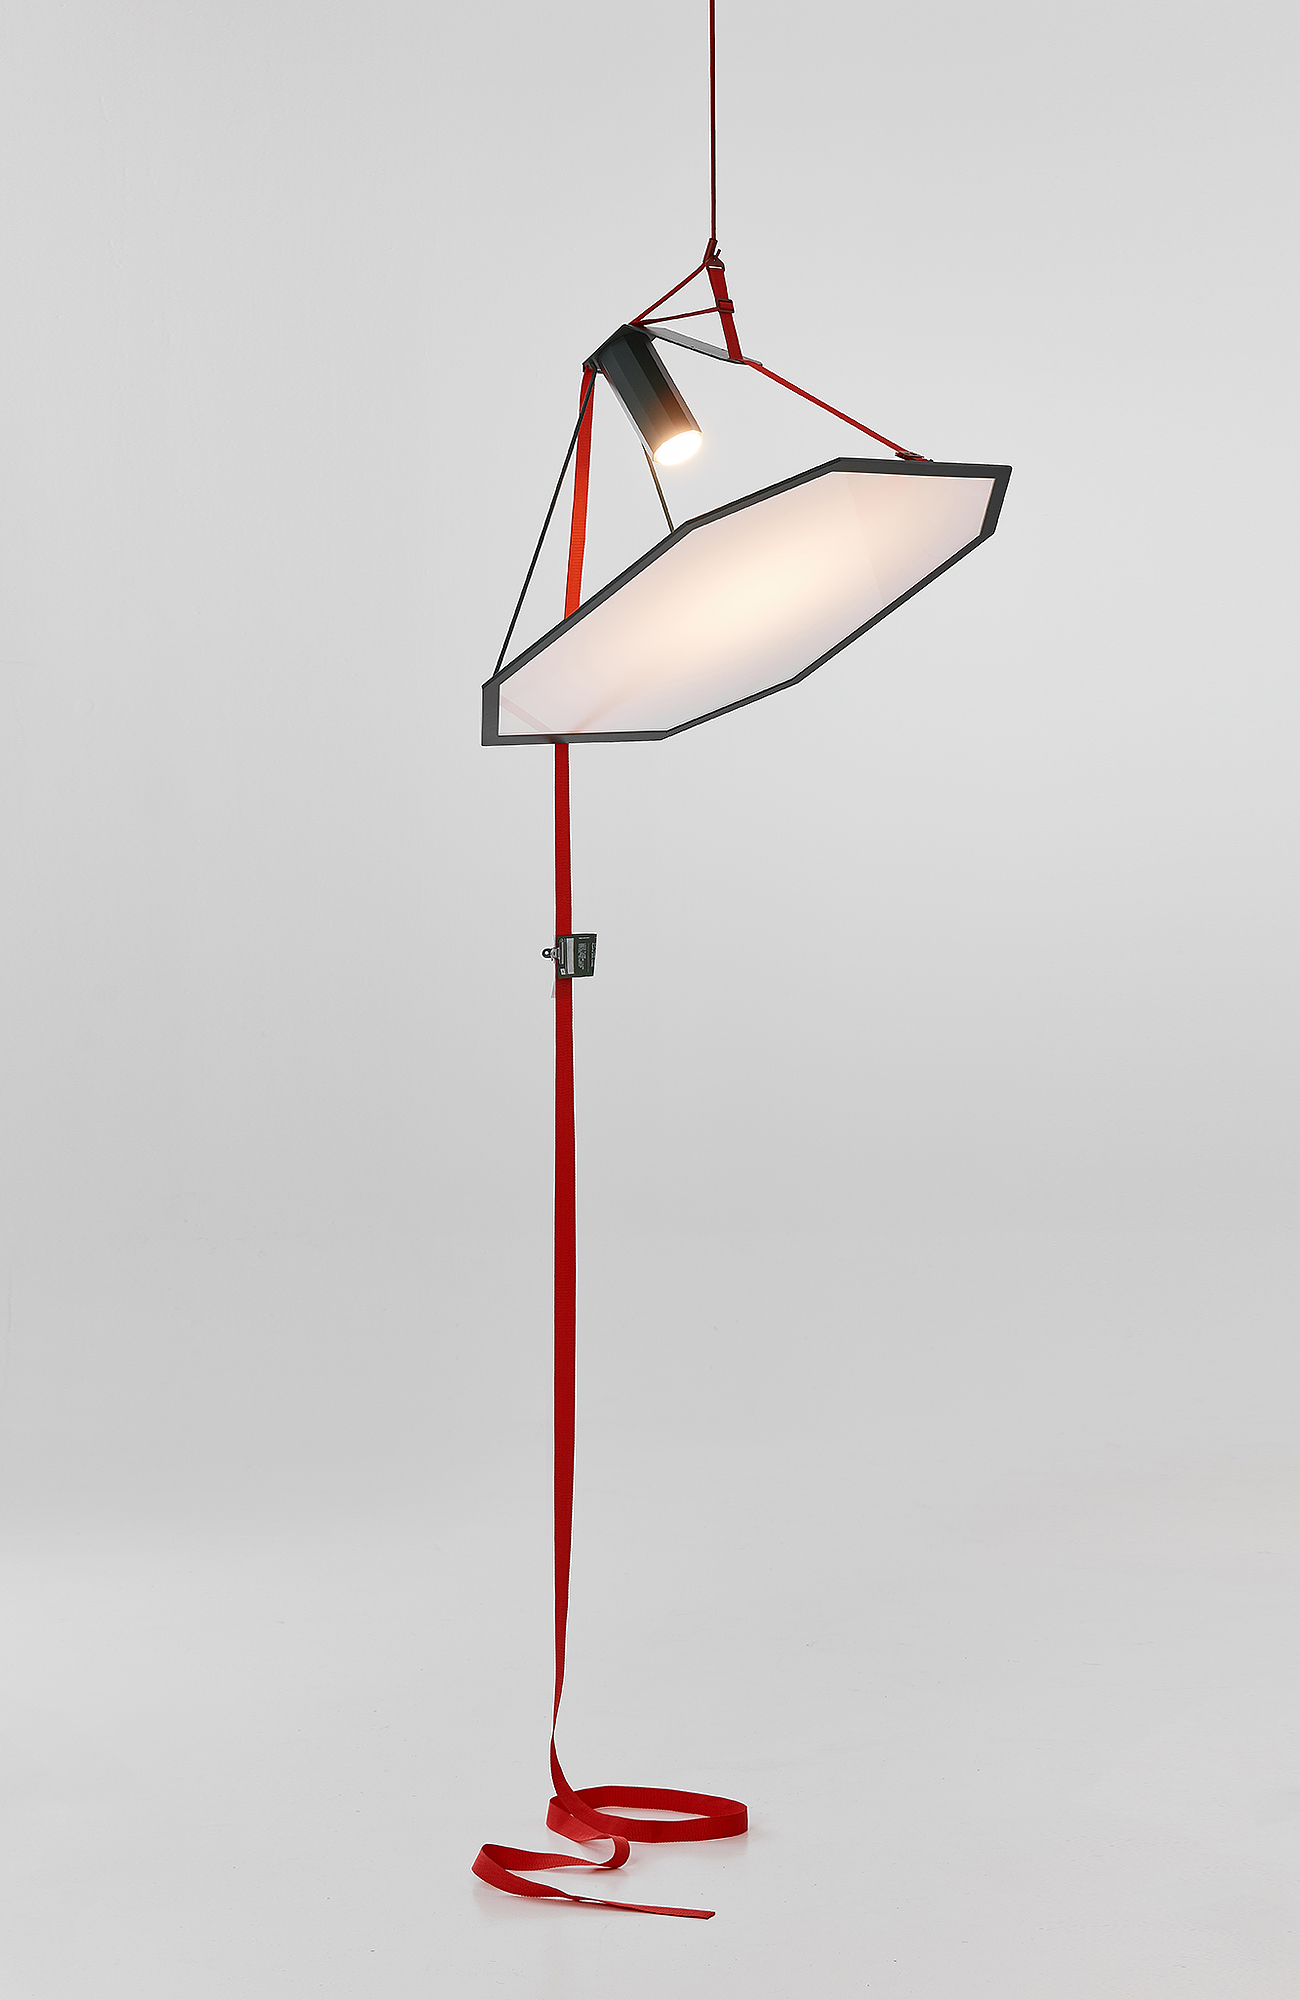 Minimalist Pendant Lamp by Joongho Choi